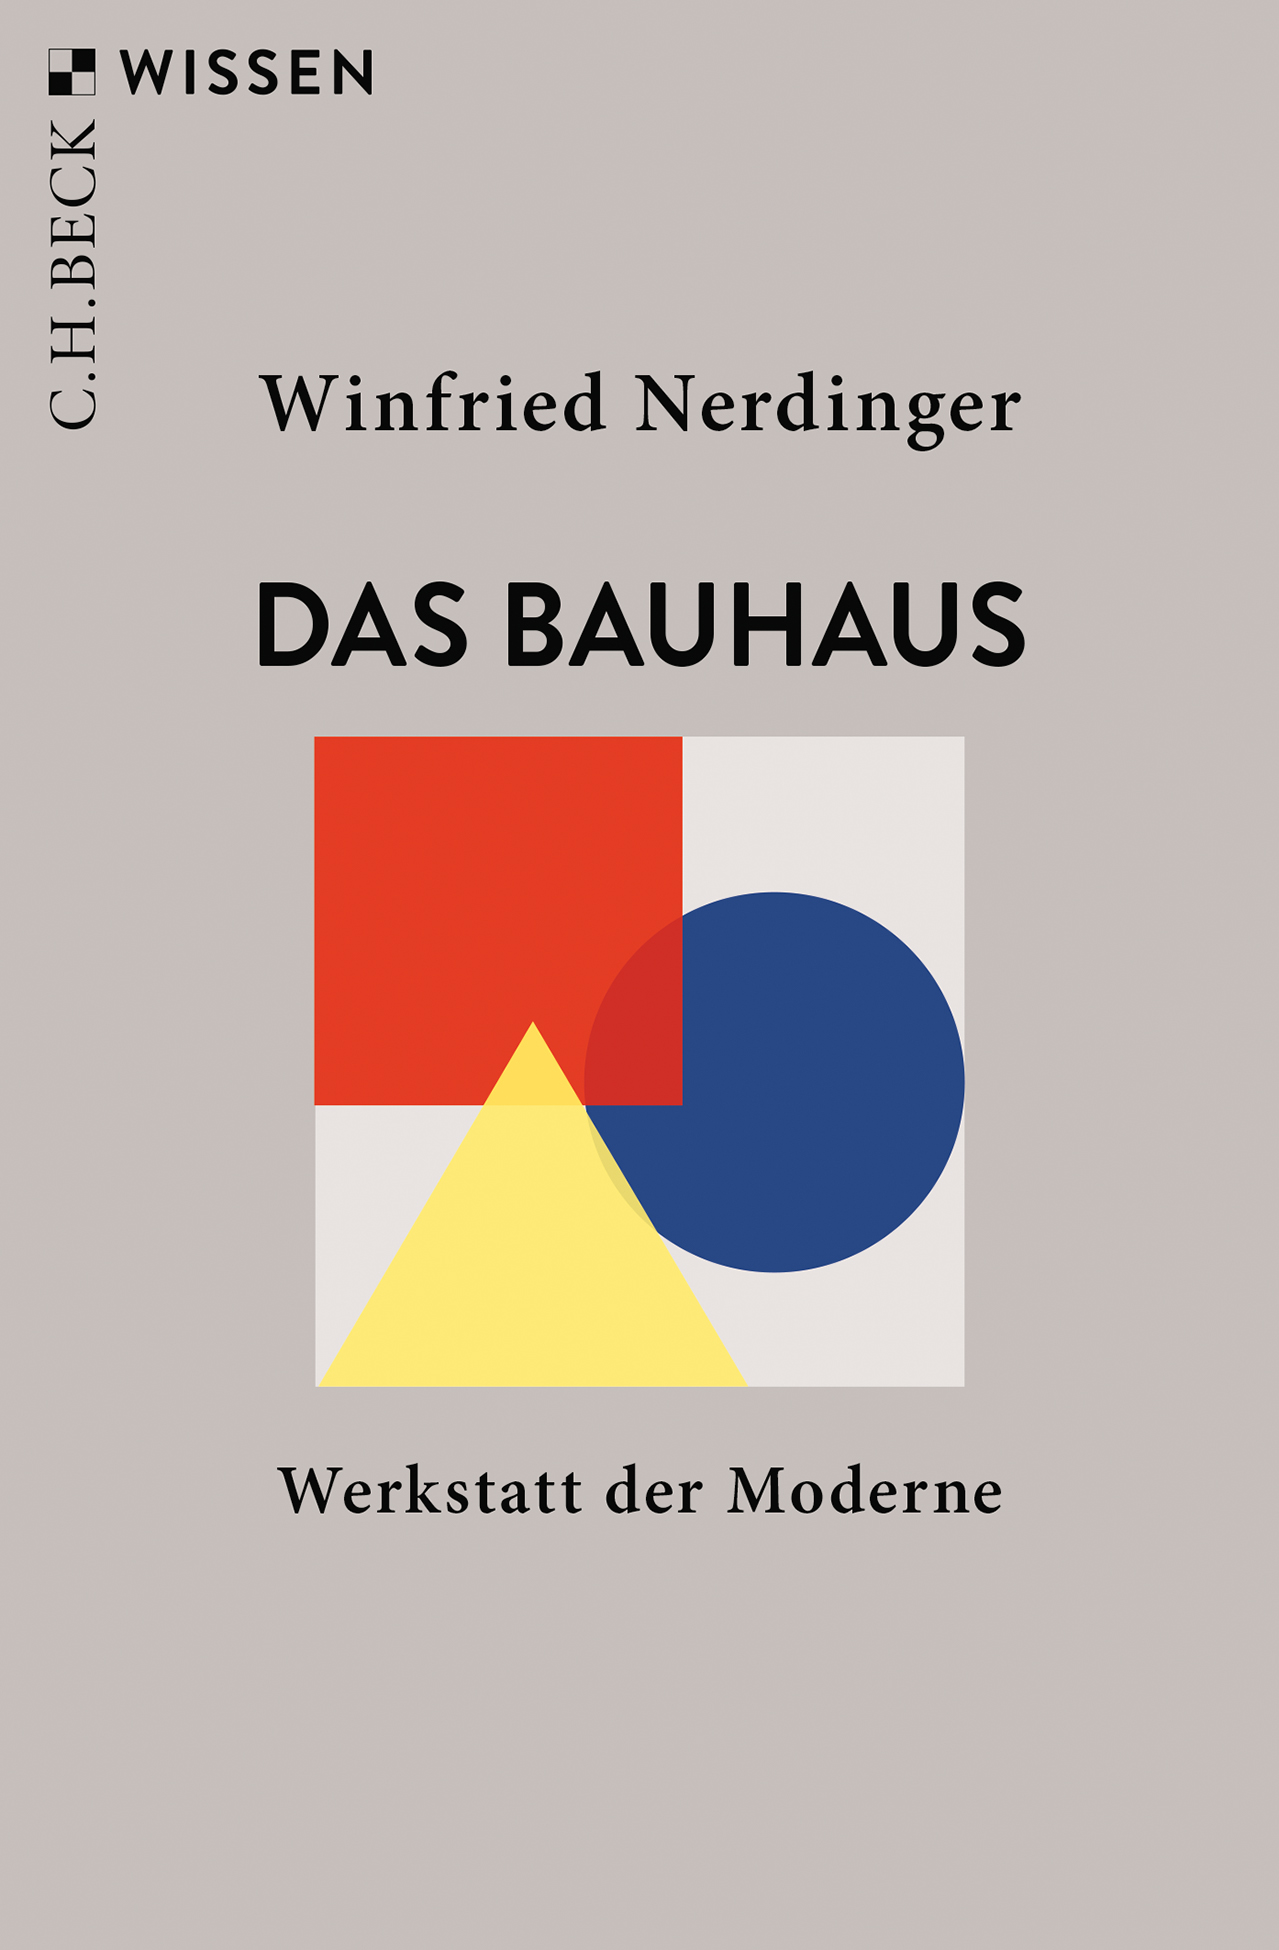 Das Bauhaus (2019)